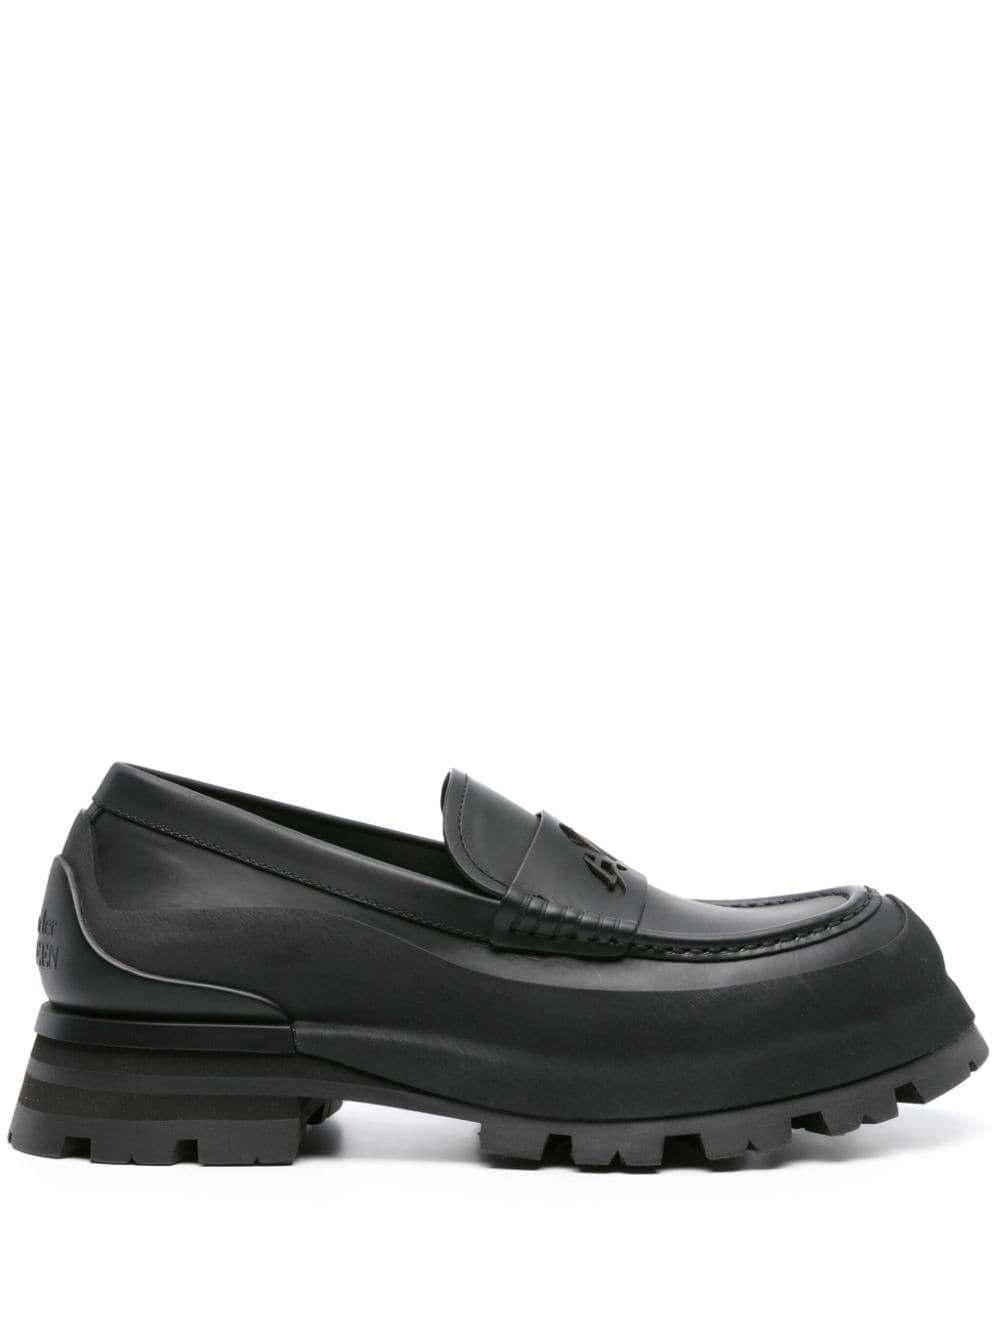 Alexander Mcqueen Flat Shoes Black